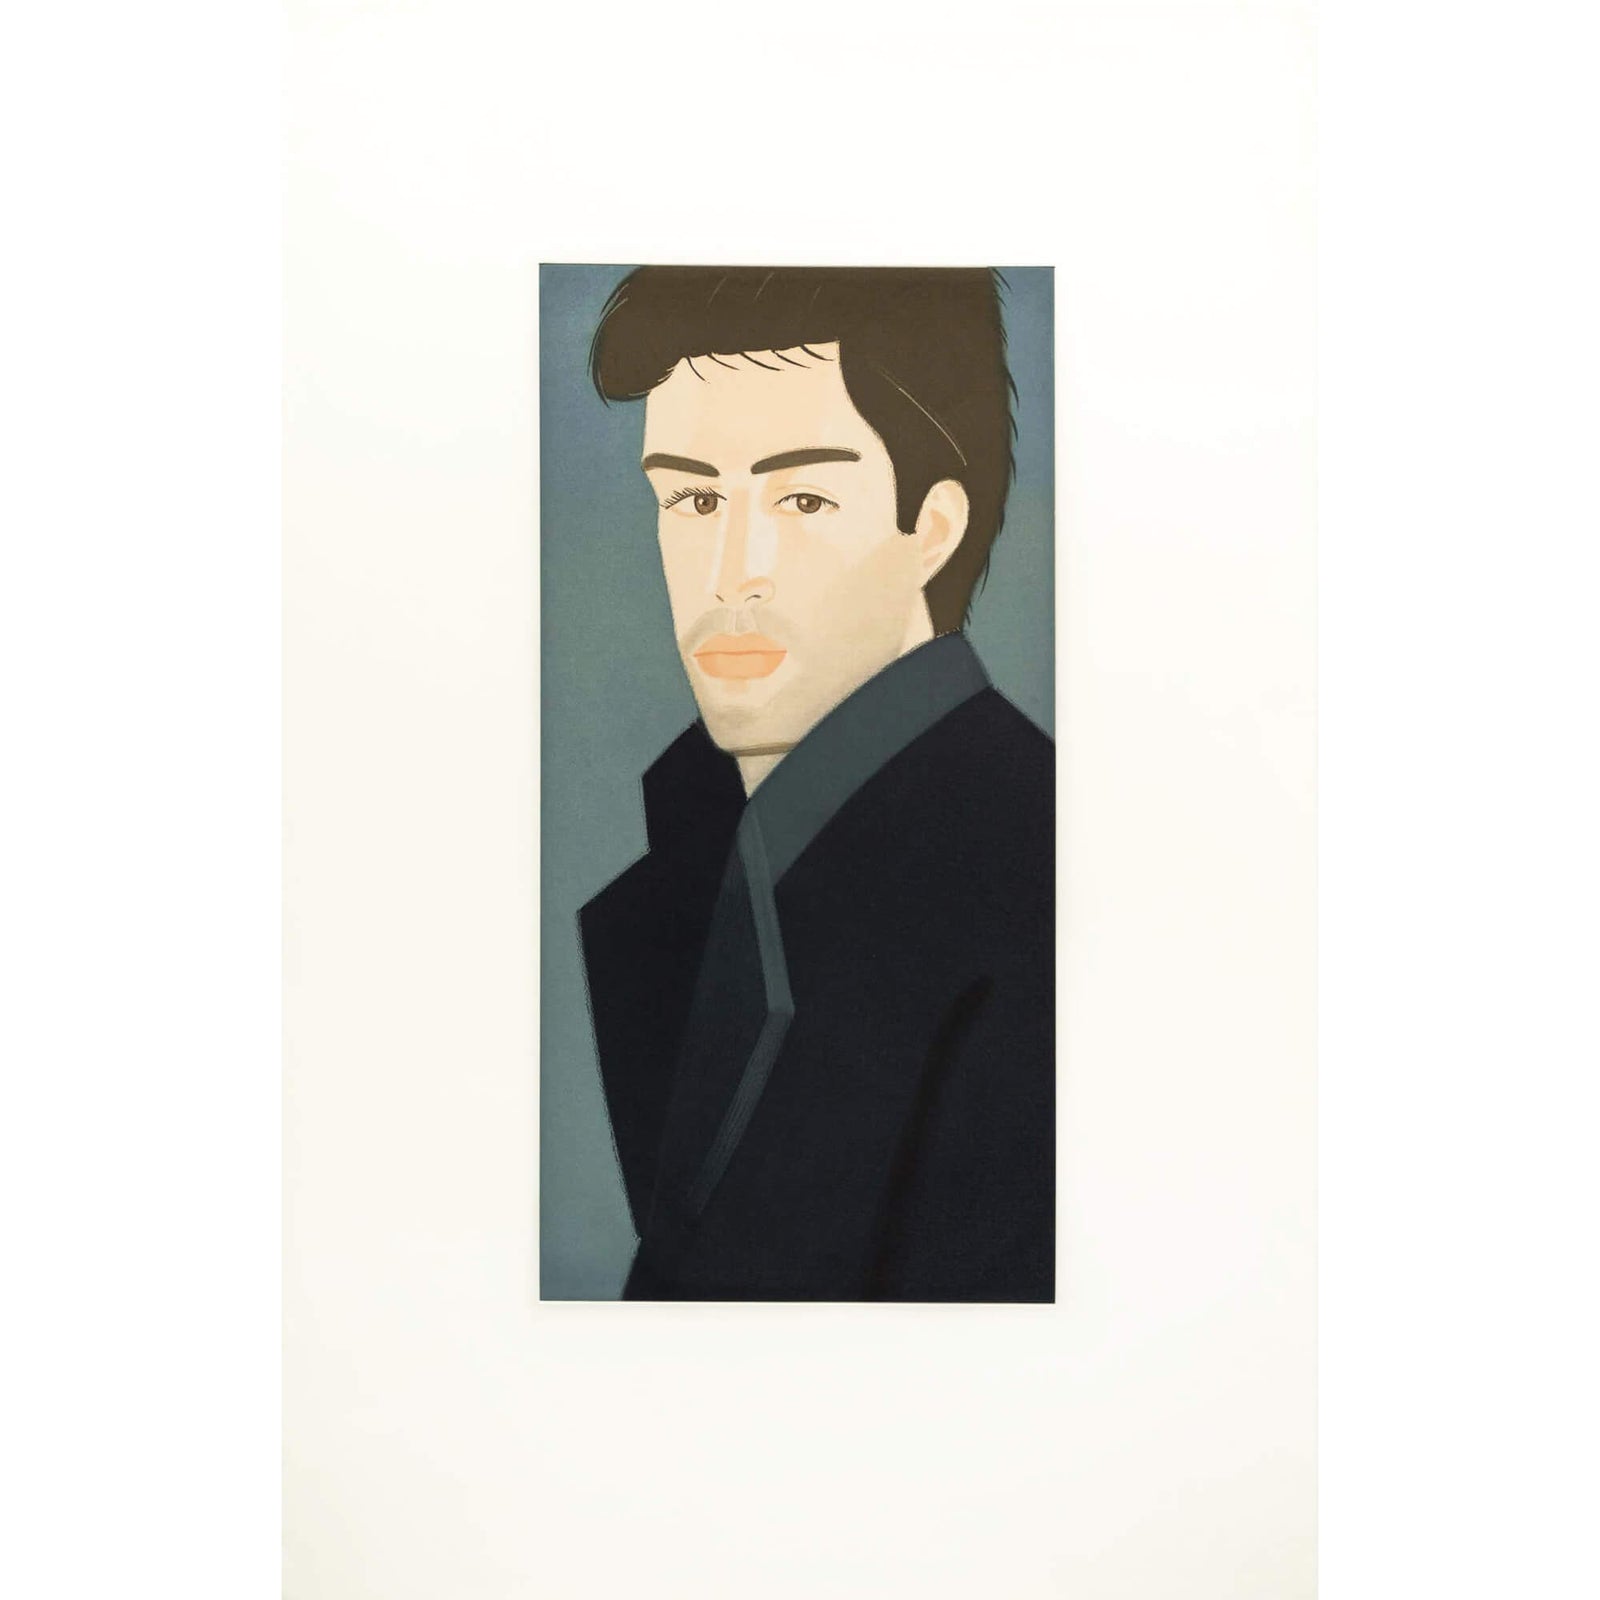 329: TAKASHI MURAKAMI, Louis Vuitton Group (4) < Modern Art